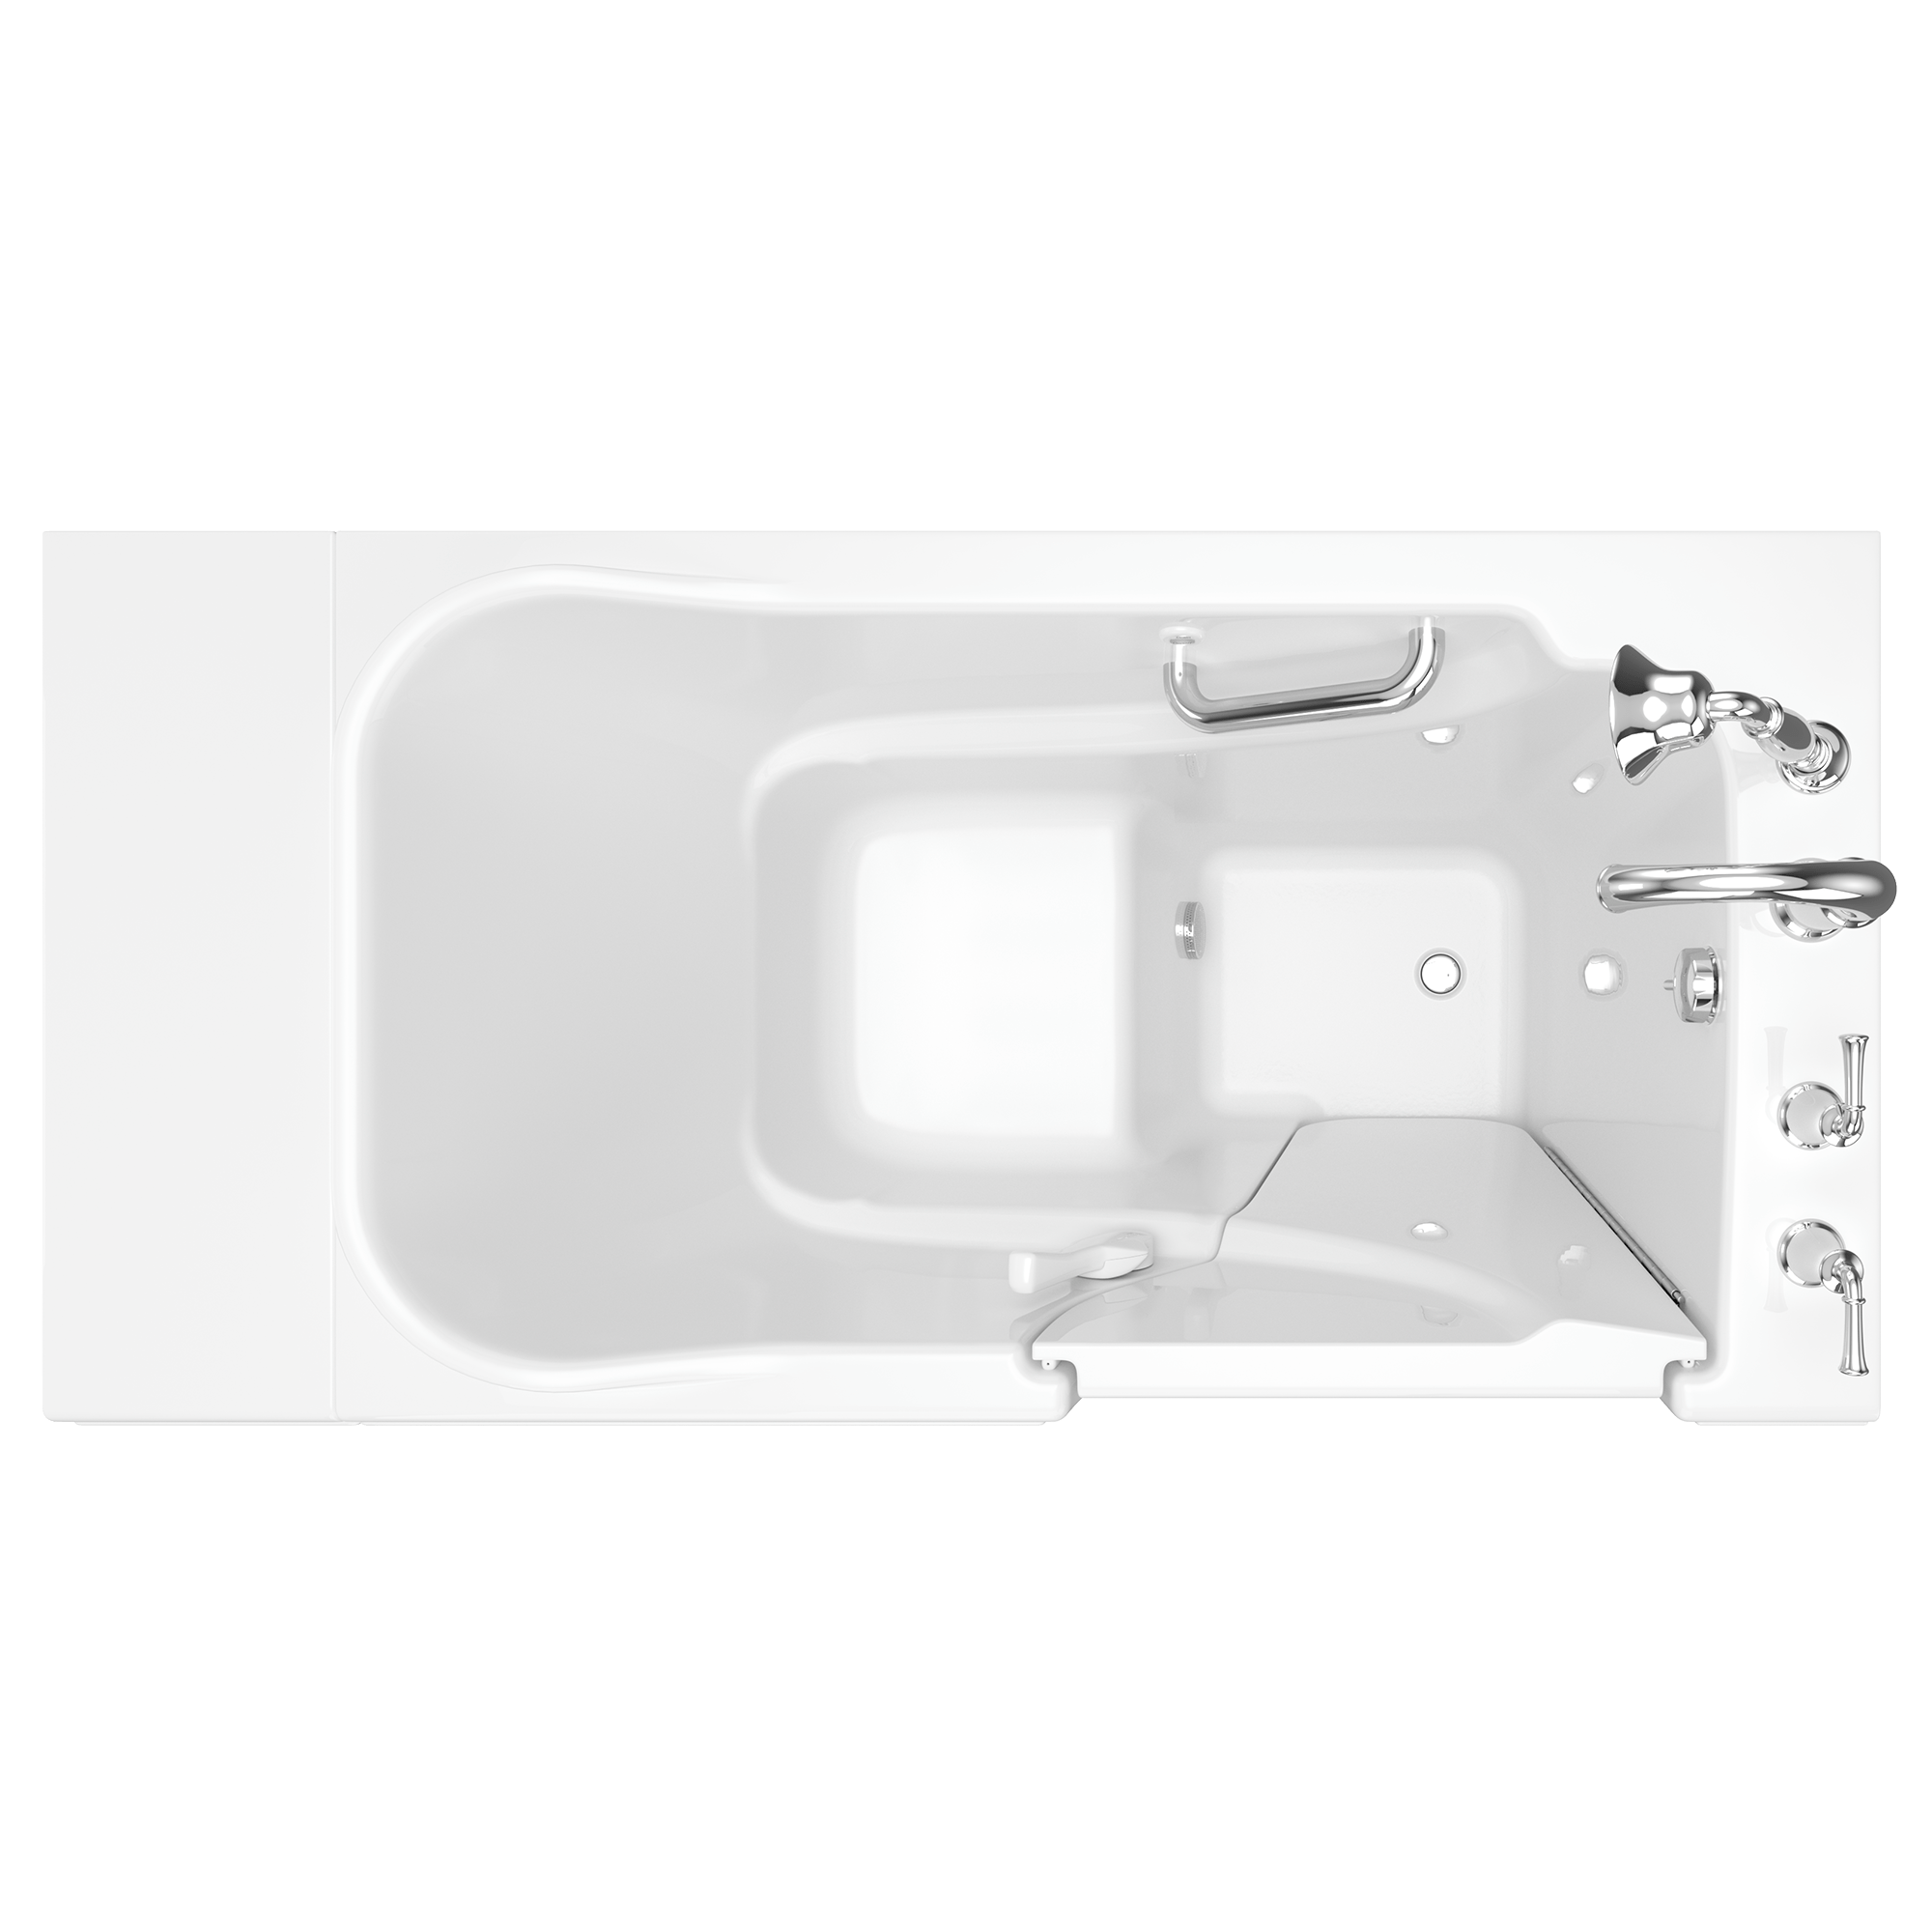 Gelcoat Value Series 30x52 Inch Soaking Walk-In Bathtub - Right Hand Door and Drain